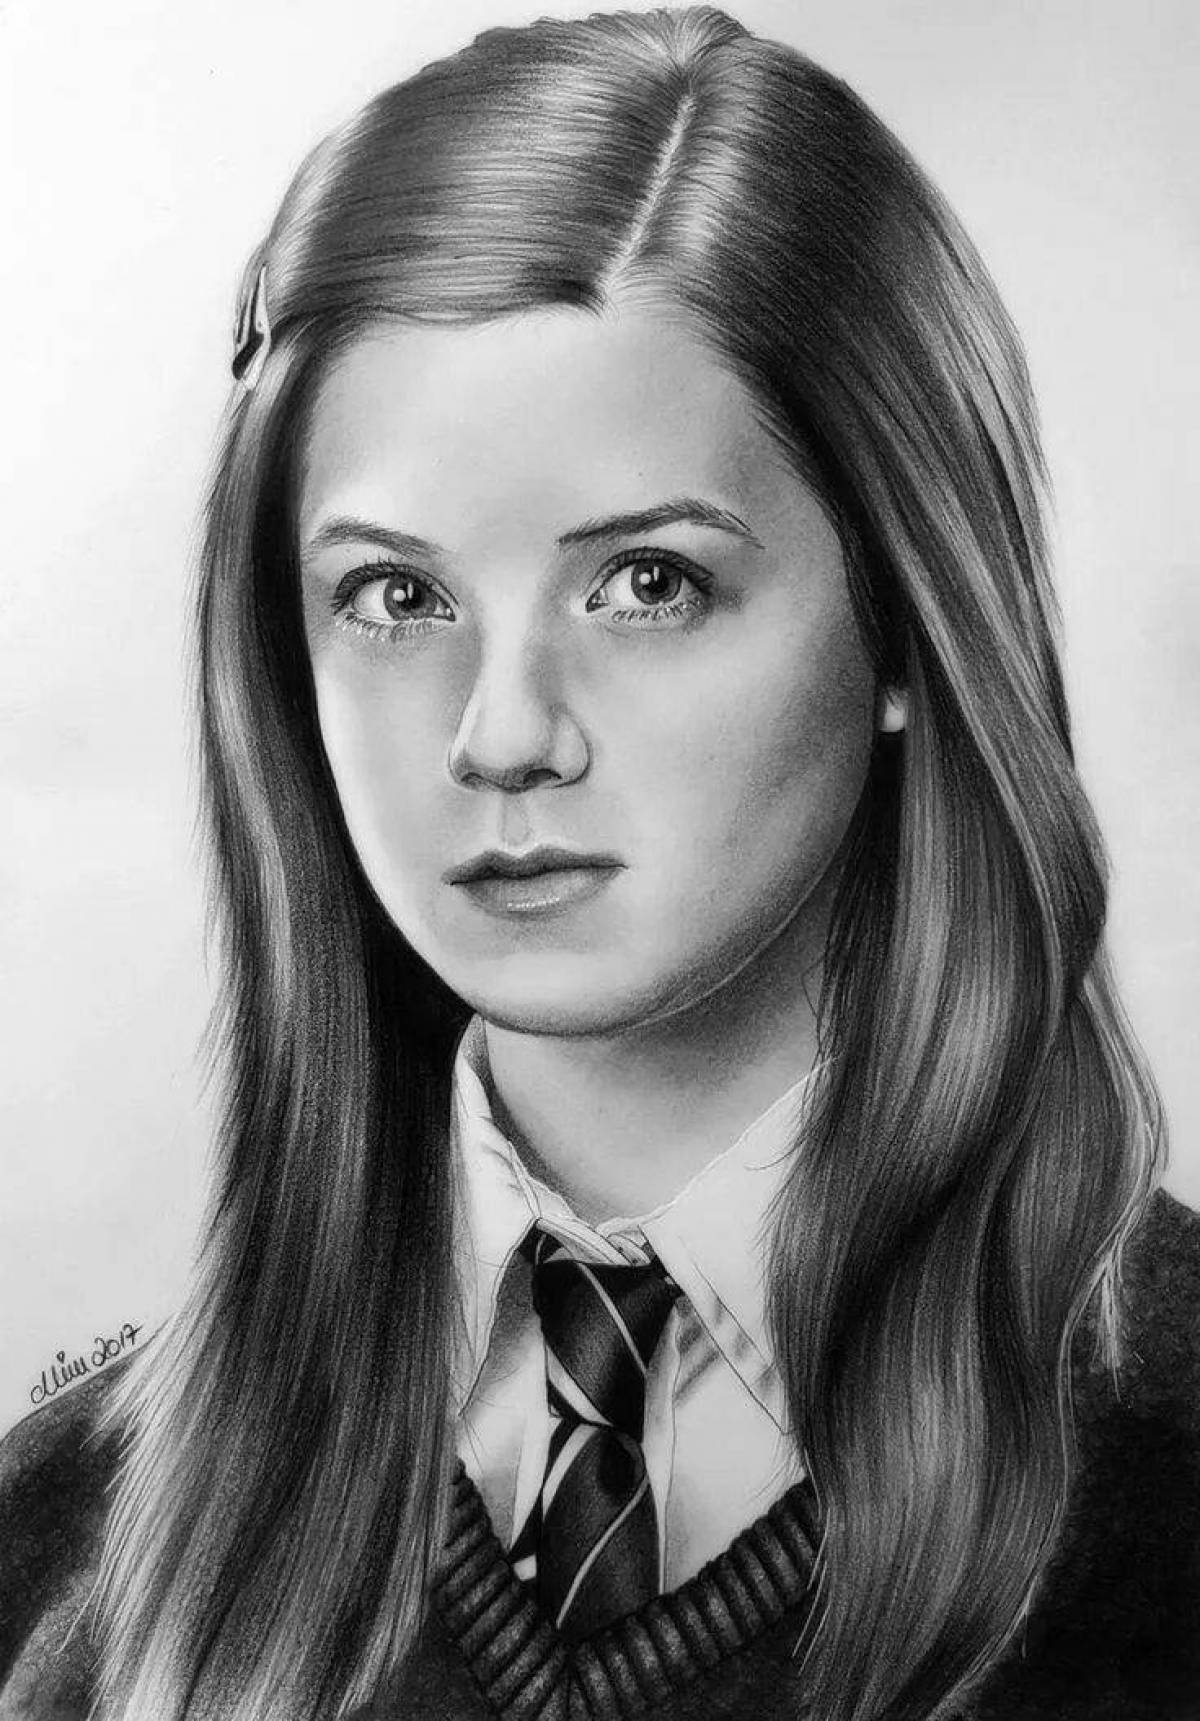 Ginny Weasley #2